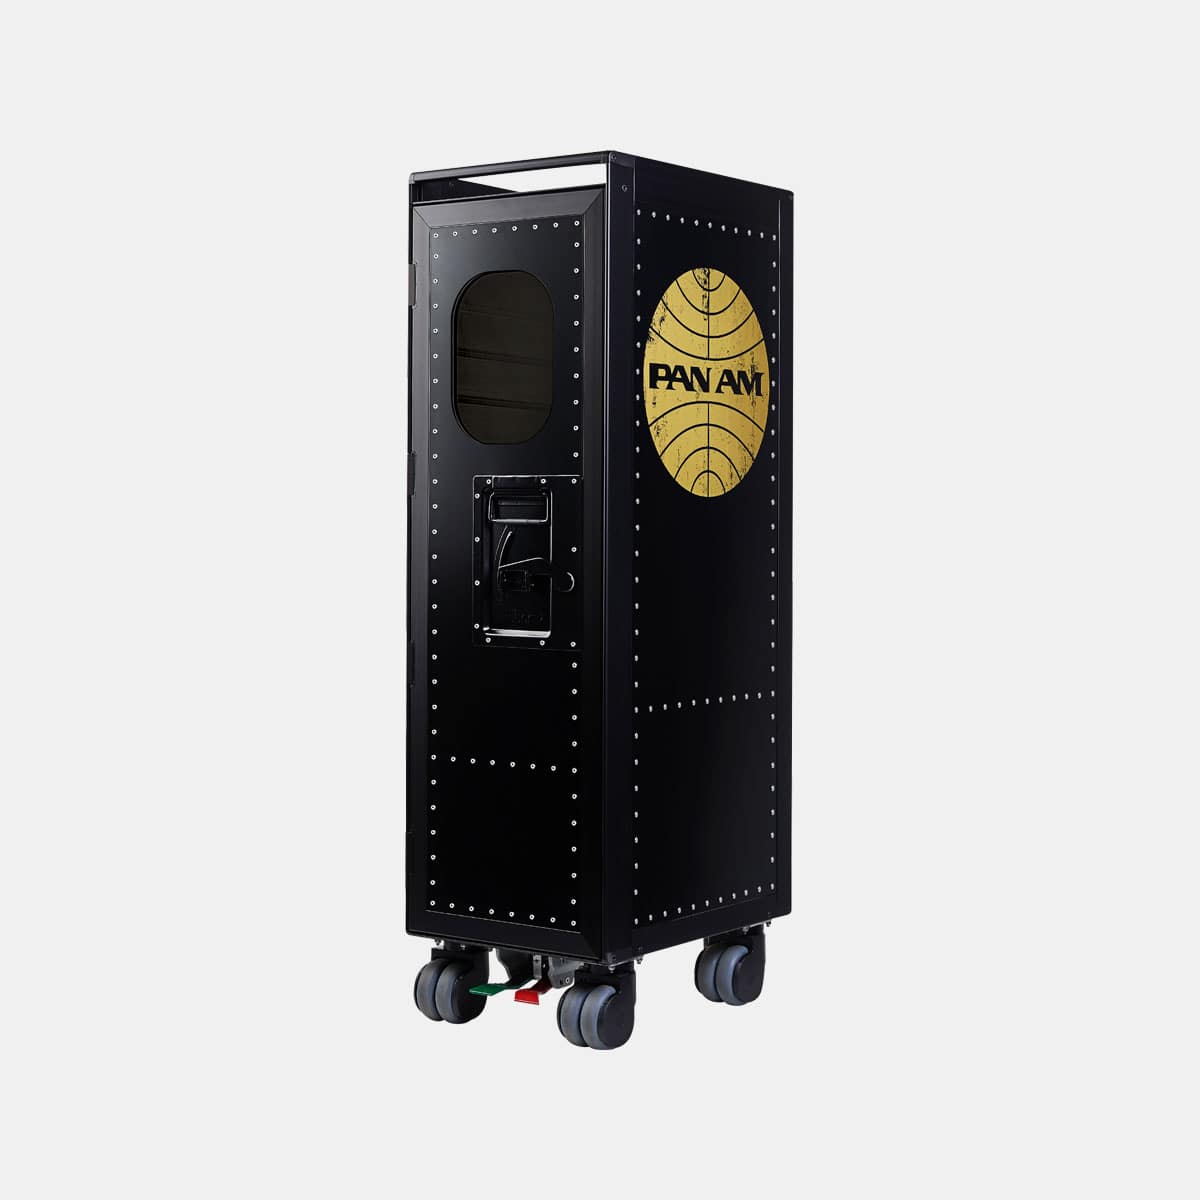 bordbar-trolley-rivet-rocker-black-edition-pan-am-gold-001shop